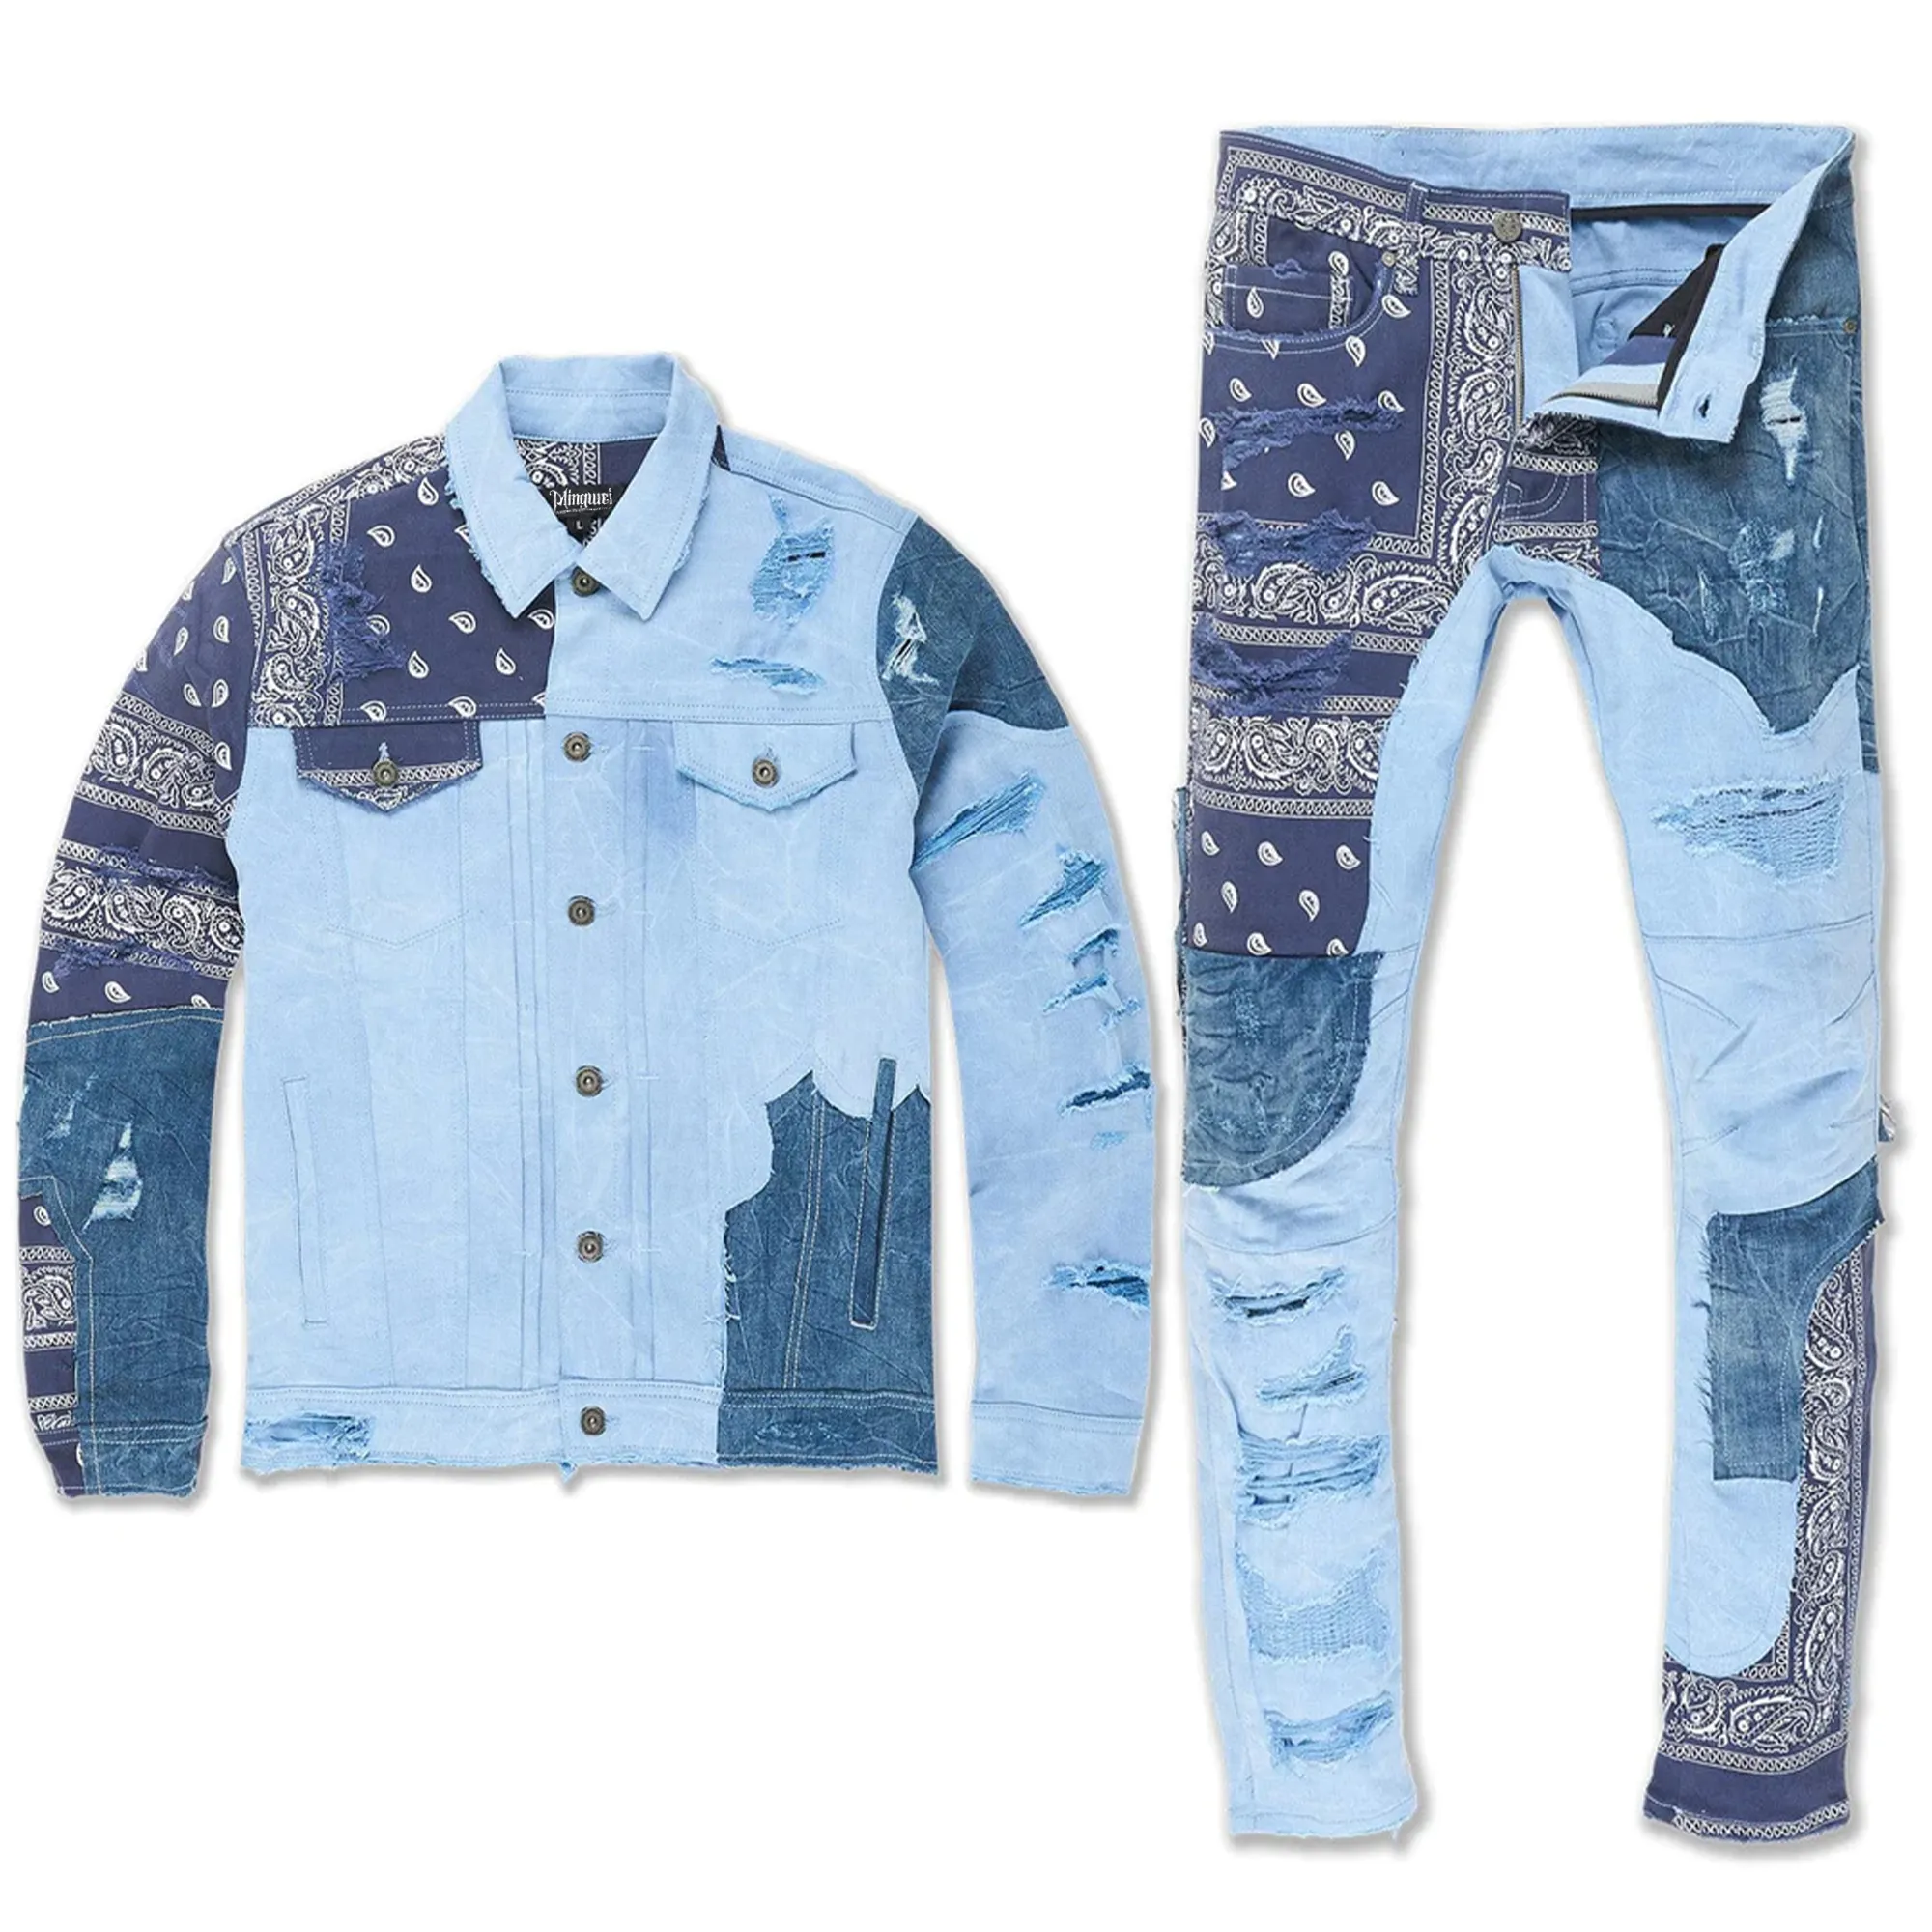 Mingwei Washed Blue Jeans Sets Denim Trucker Jacket Patch Distressed Two Piece Denim Sets Hombres